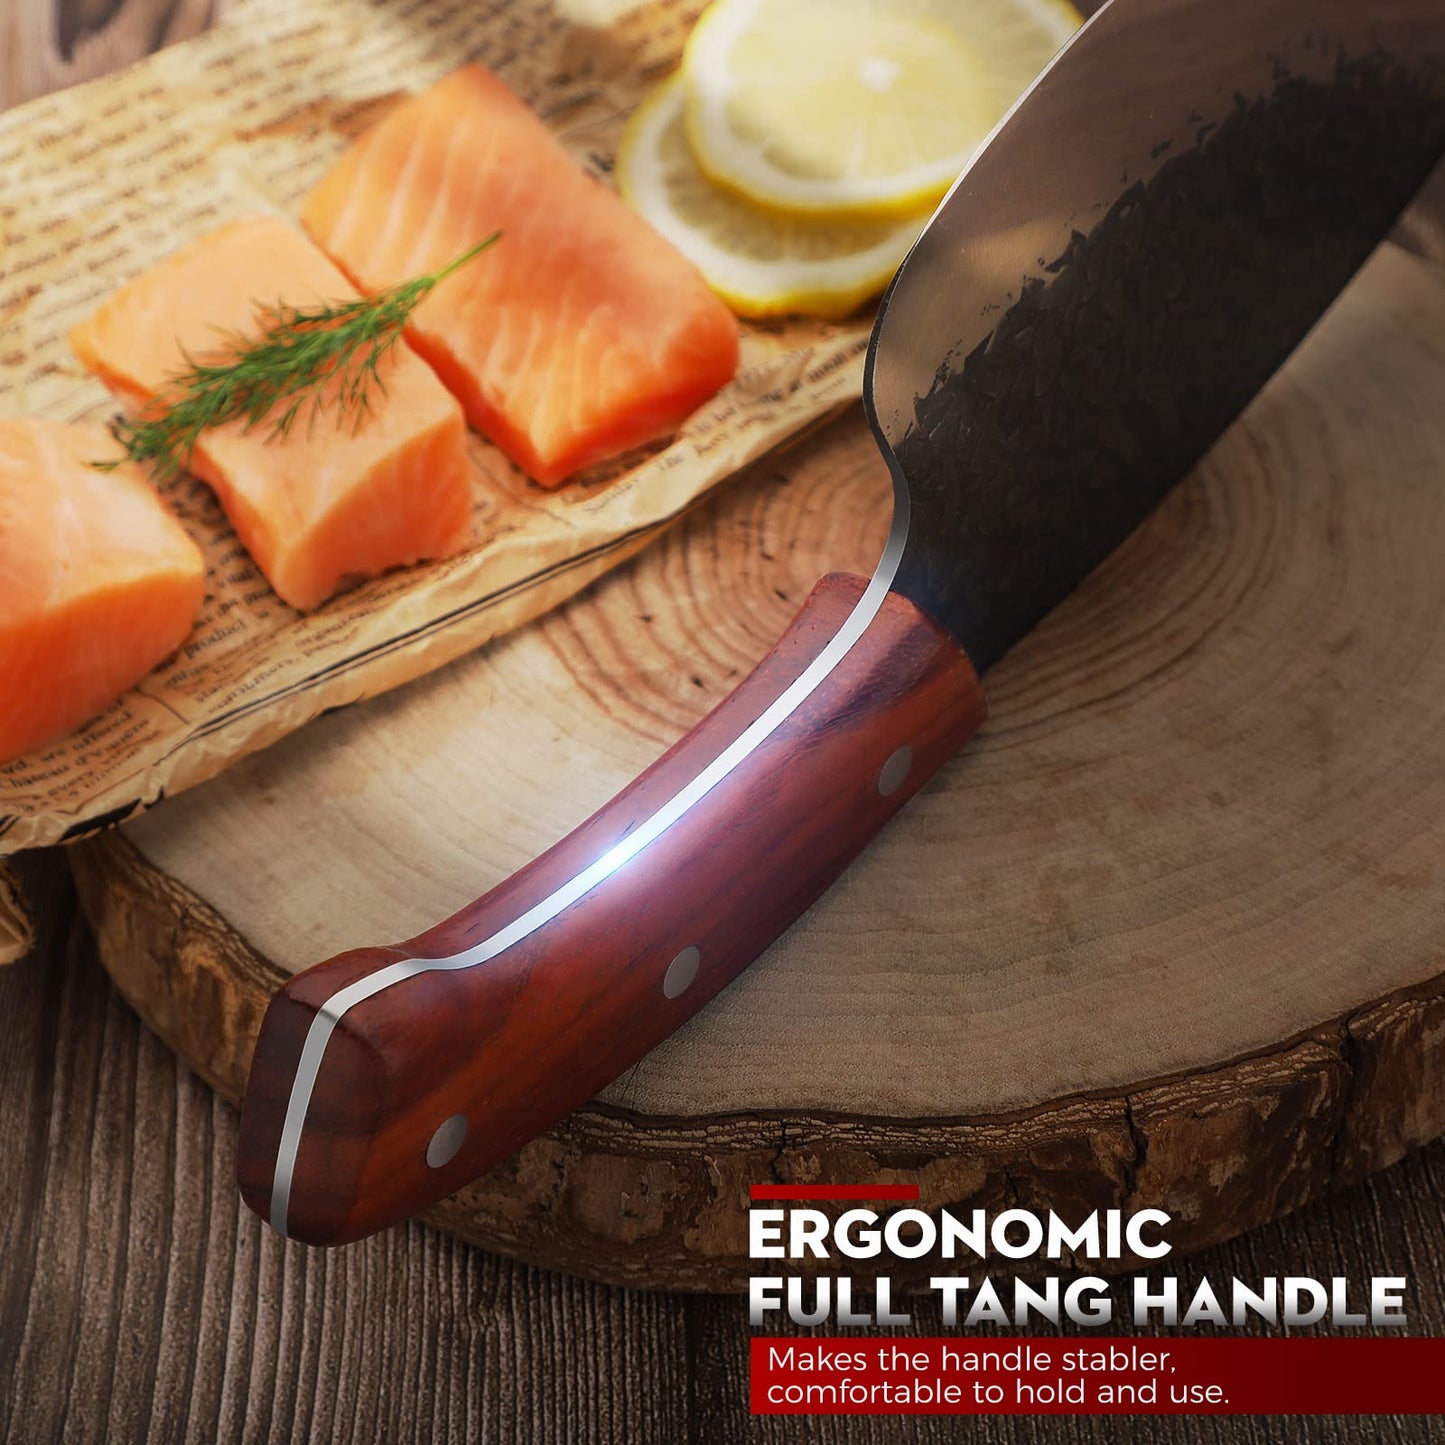 TIVOLI Full Tang Fish Fillet Knife – HAND FORGED KNIFE